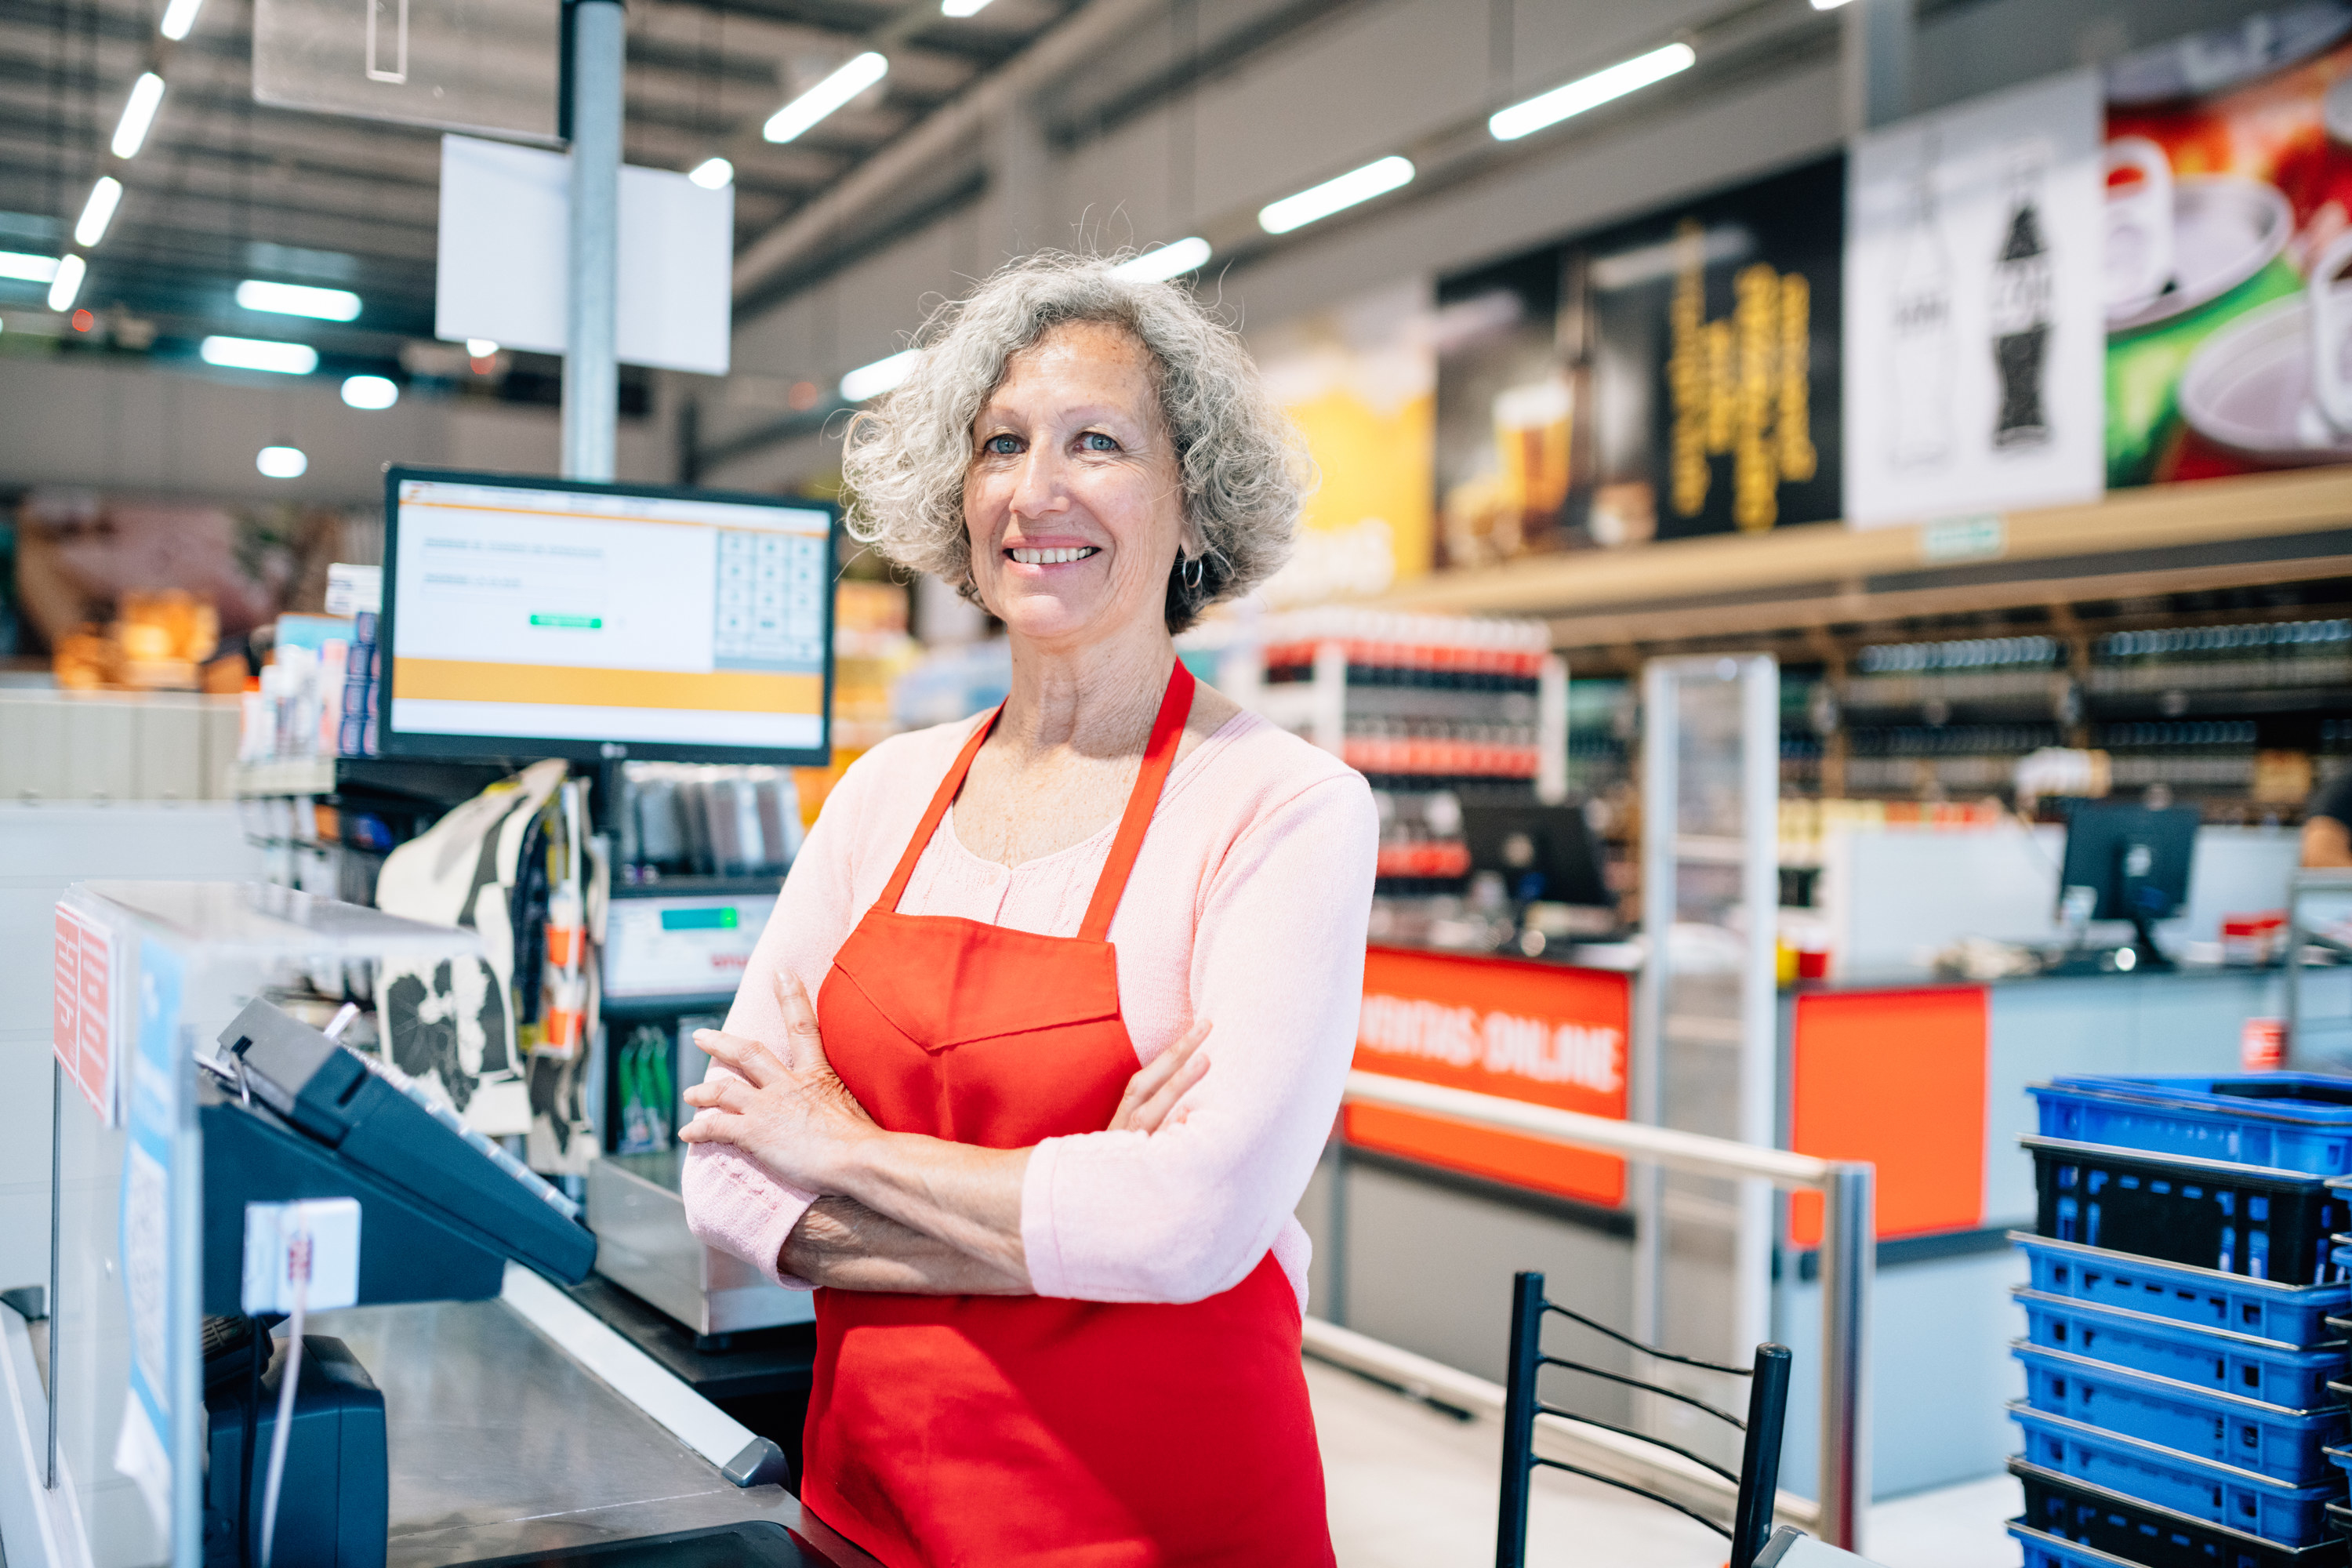 Senior woman working as a cashier